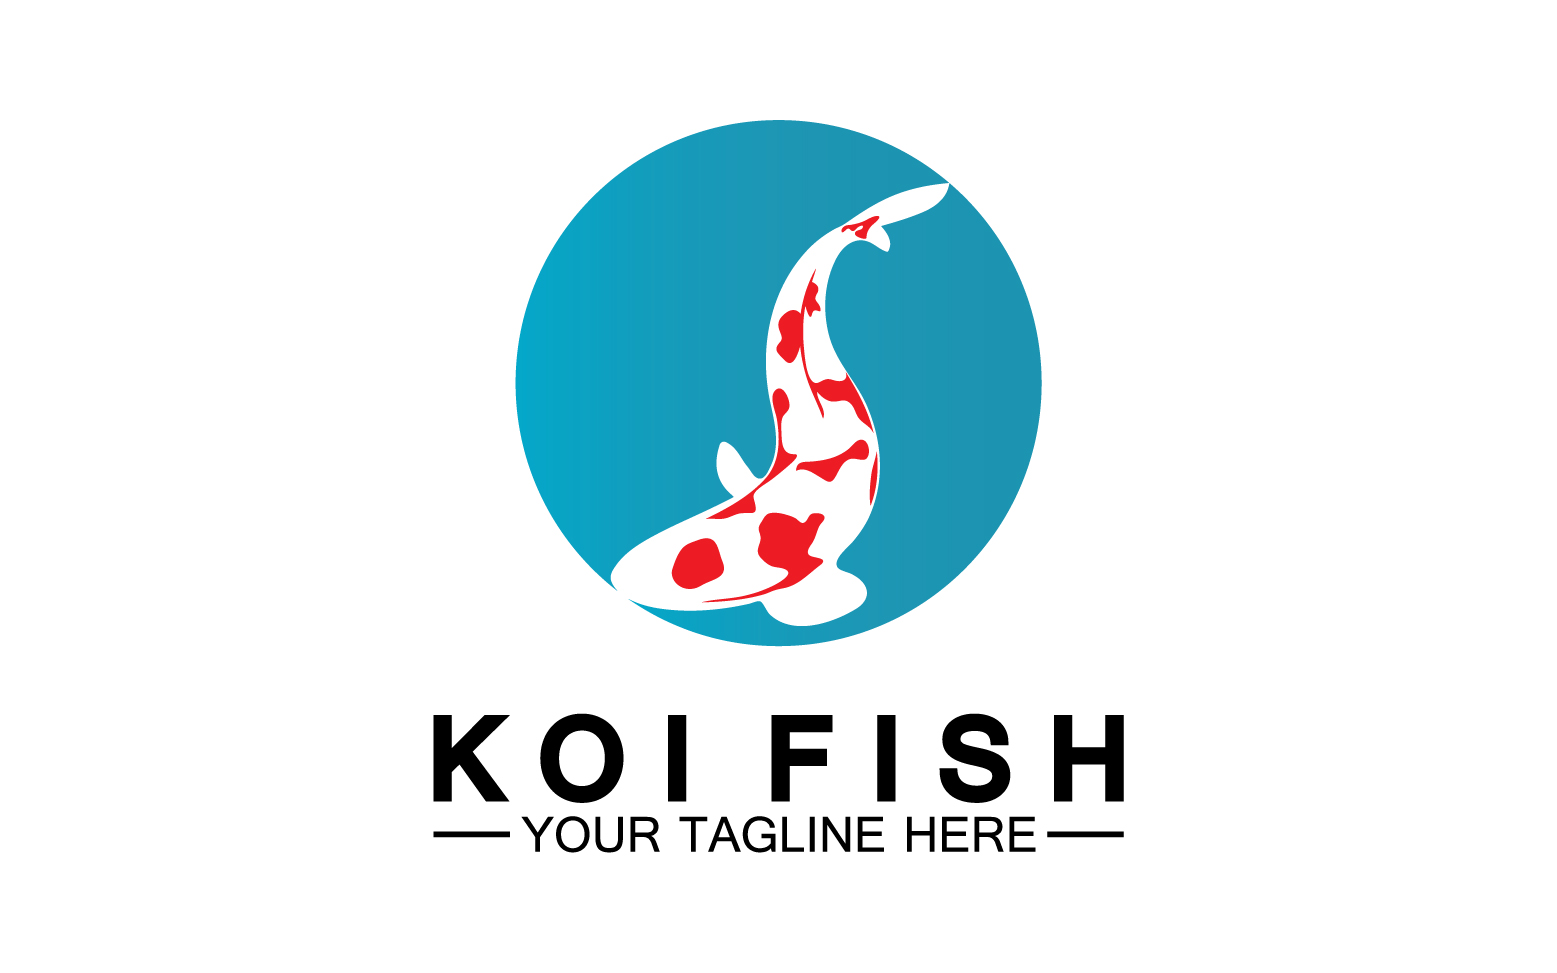 Fish koi black and red icon logo vector v27